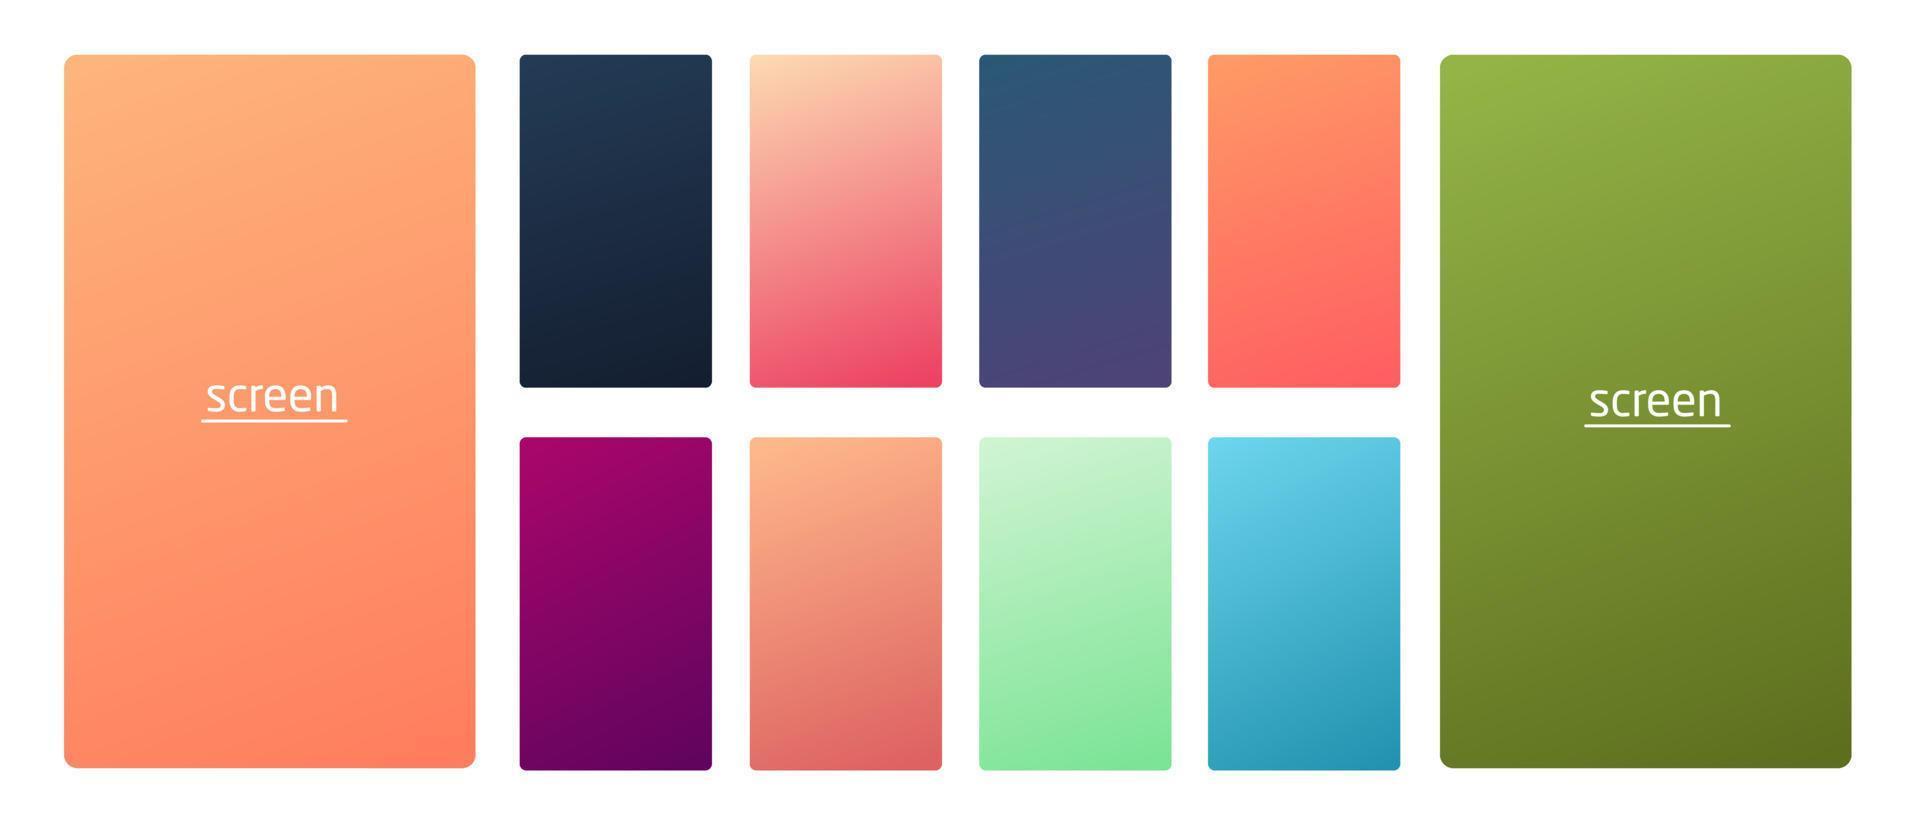 fundo de cor suave gradiente pastel vibrante e suave definido para dispositivos, pc e tela do smartphone moderno fundos de cor pastel suave vector ux e ui design illustration.